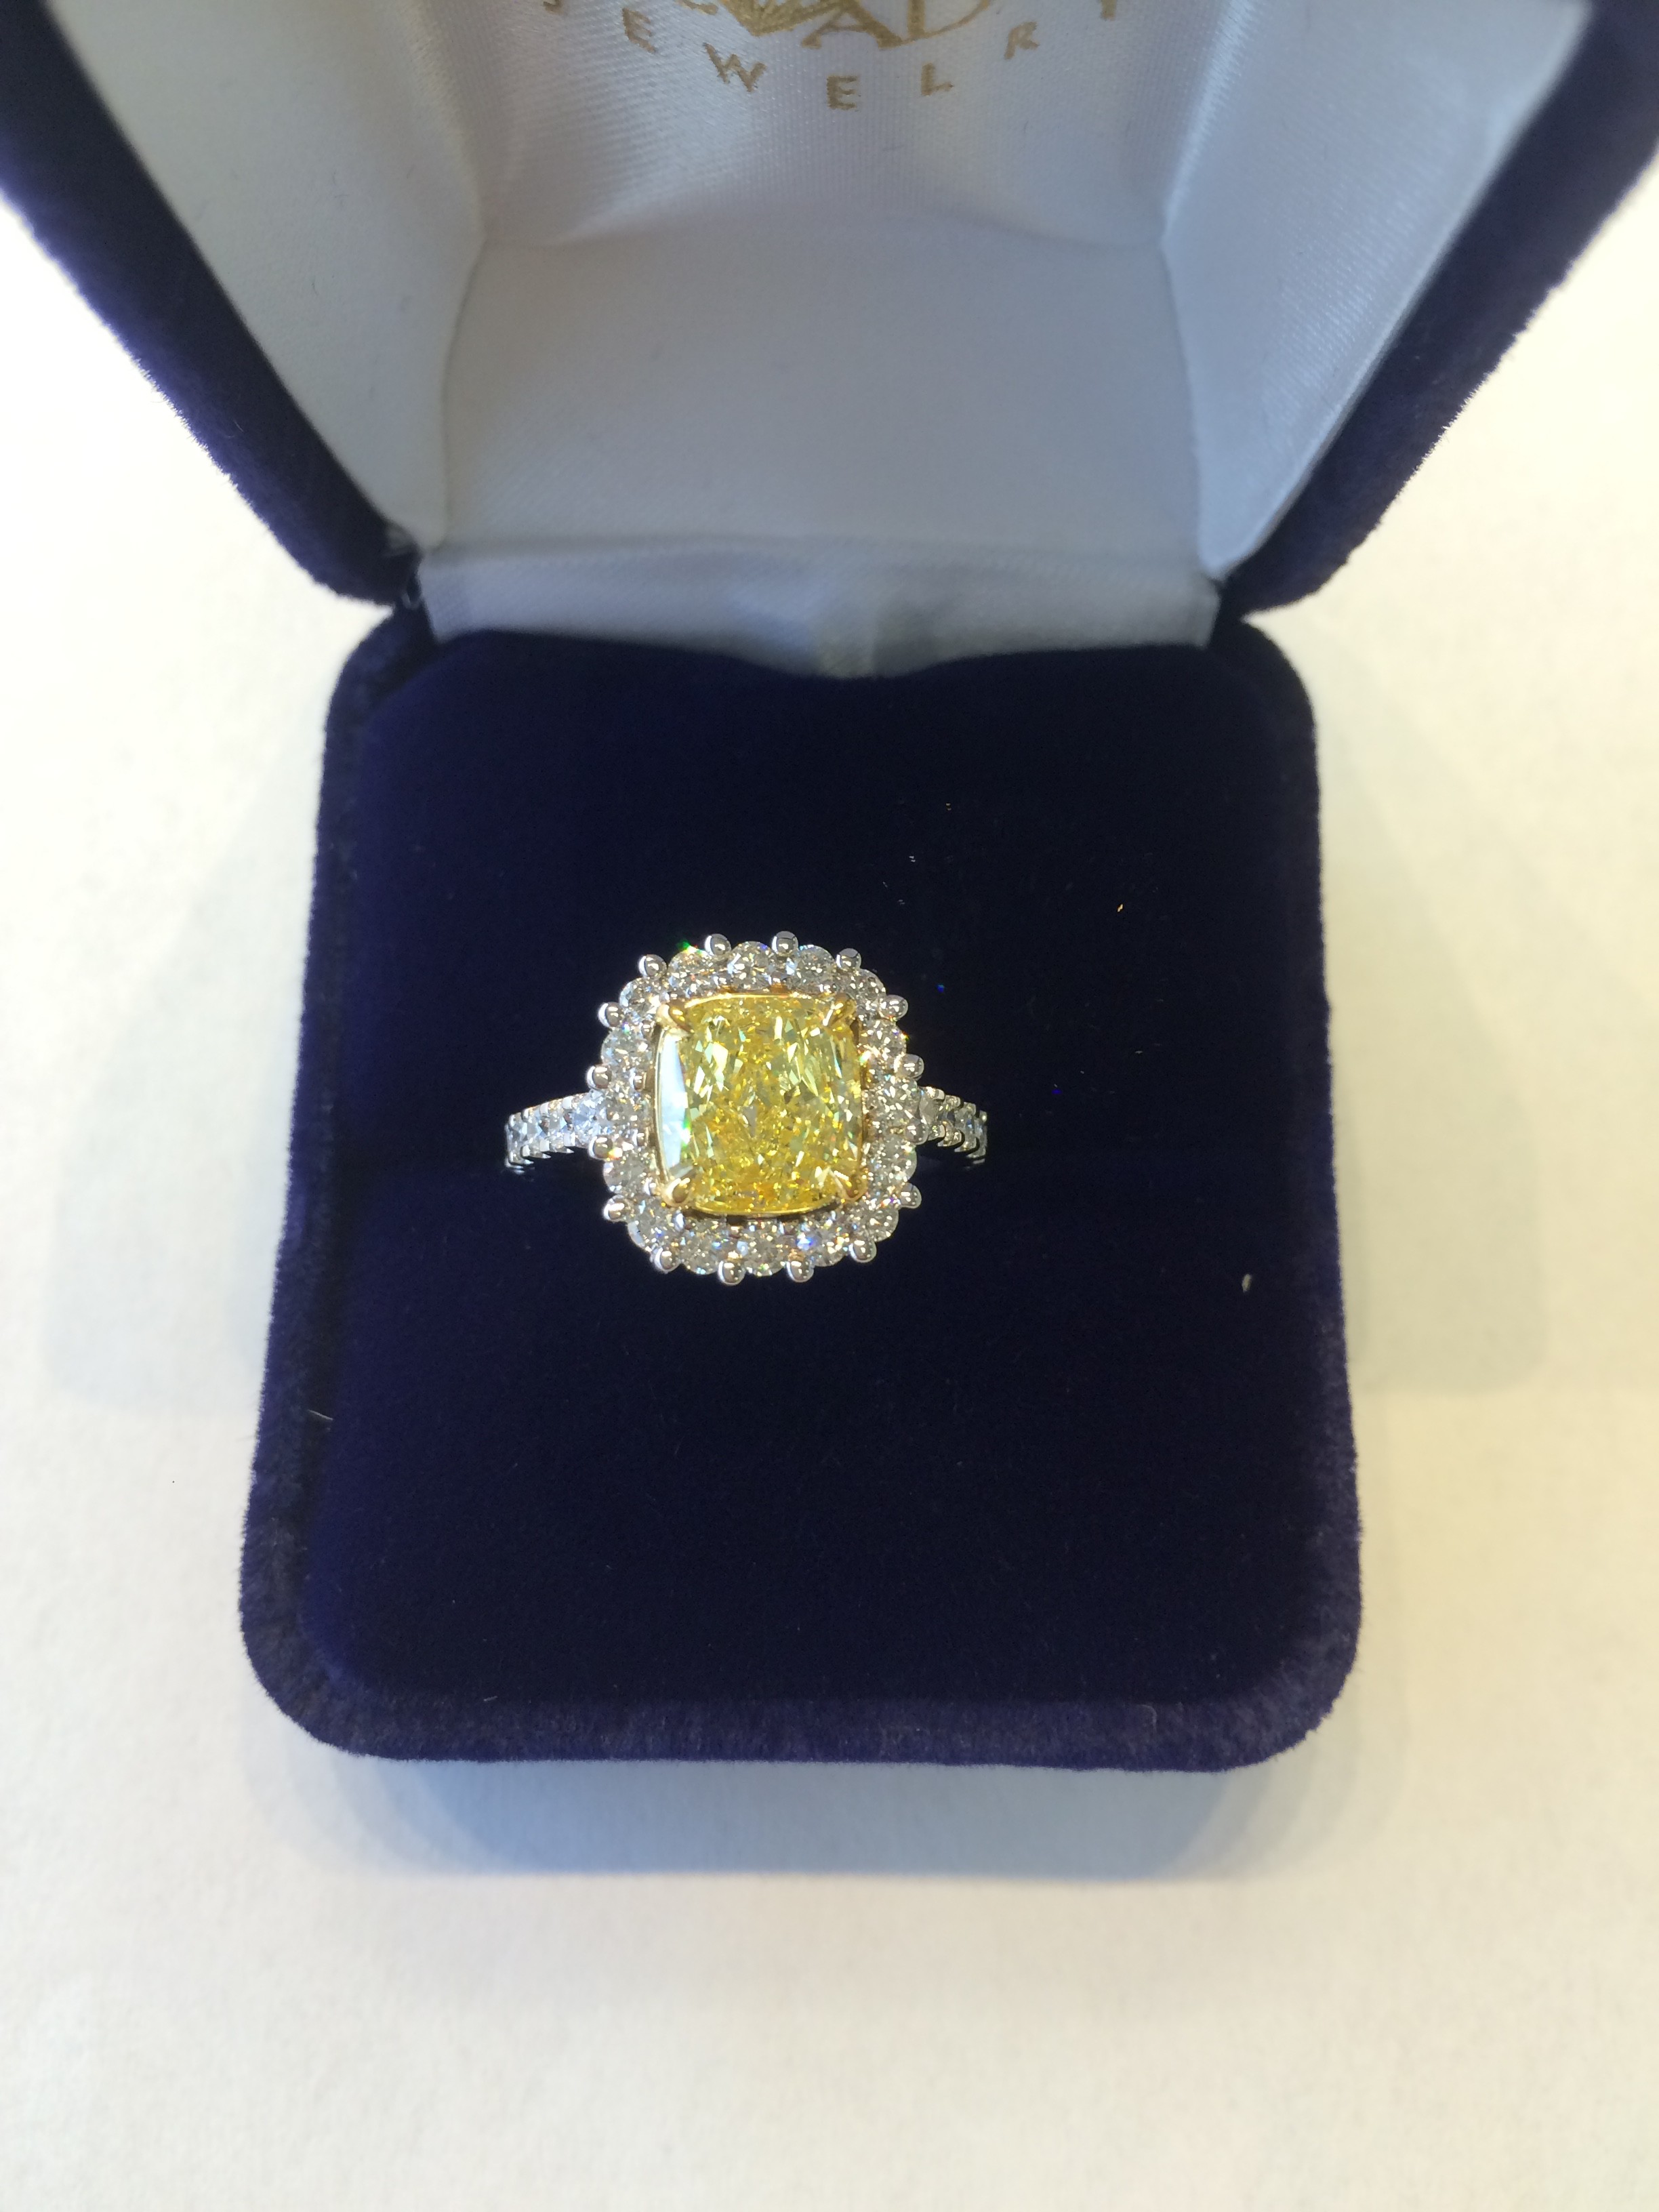 Fancy Intense Yellow Diamond Ring